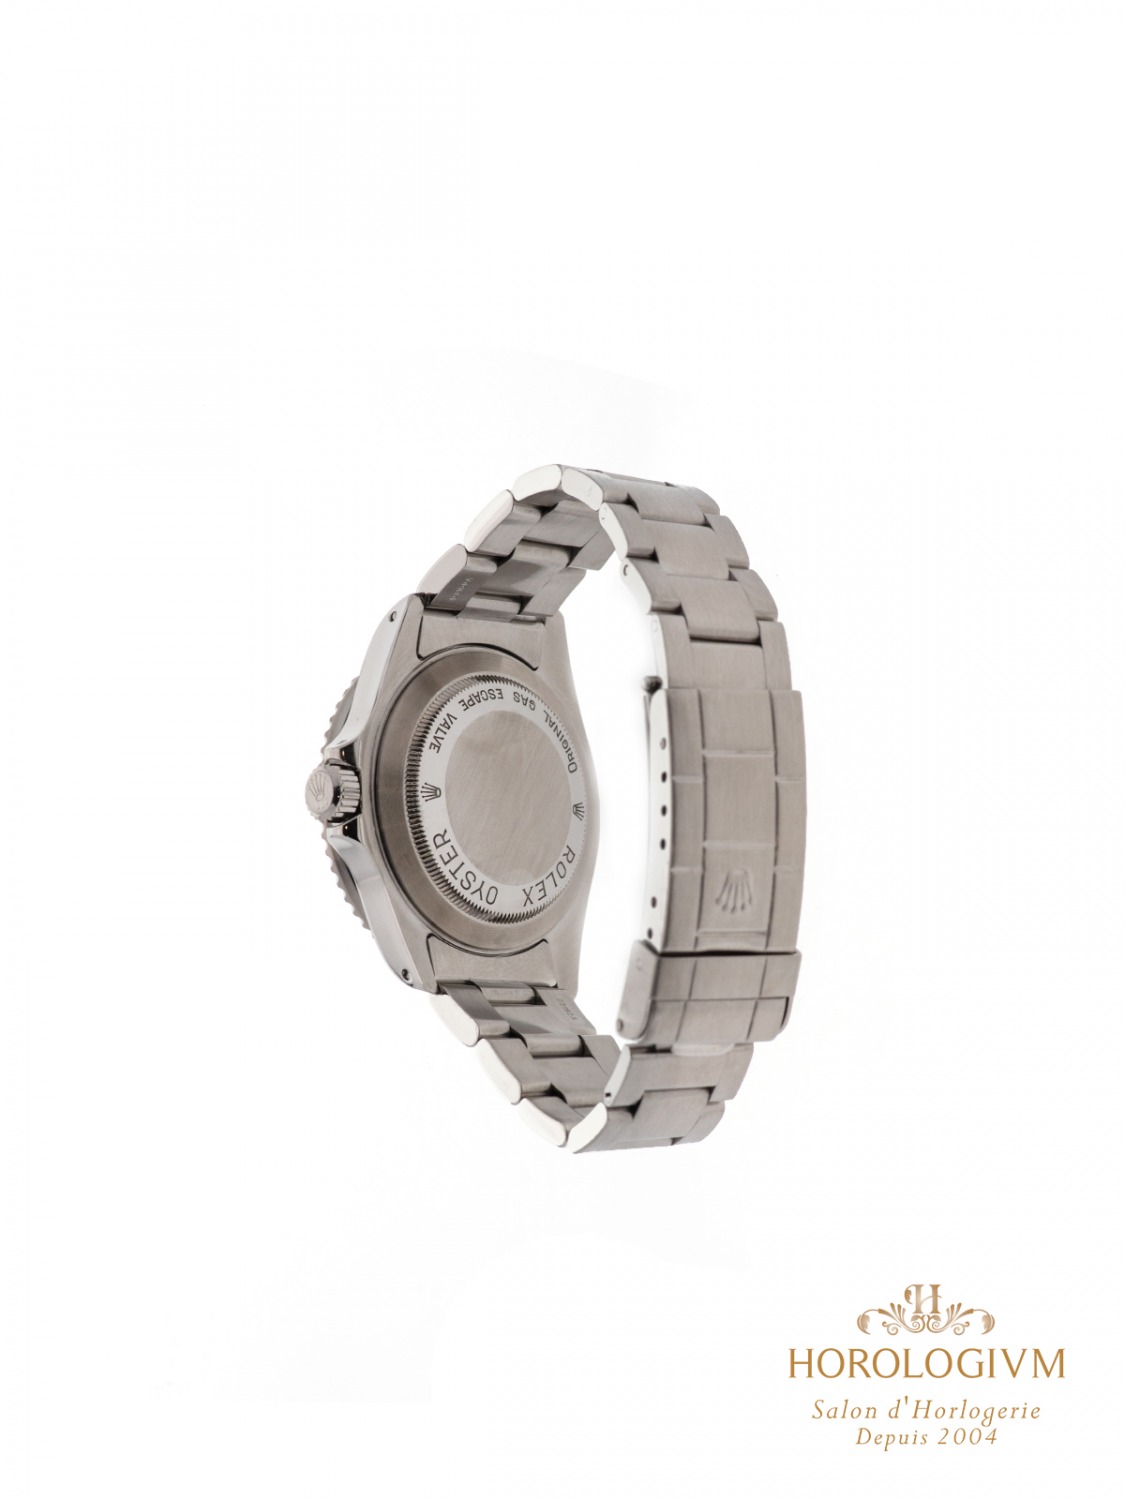 Rolex Oyster Perpetual Sea-Dweller 40MM, REF. 16600, watch, silver & black